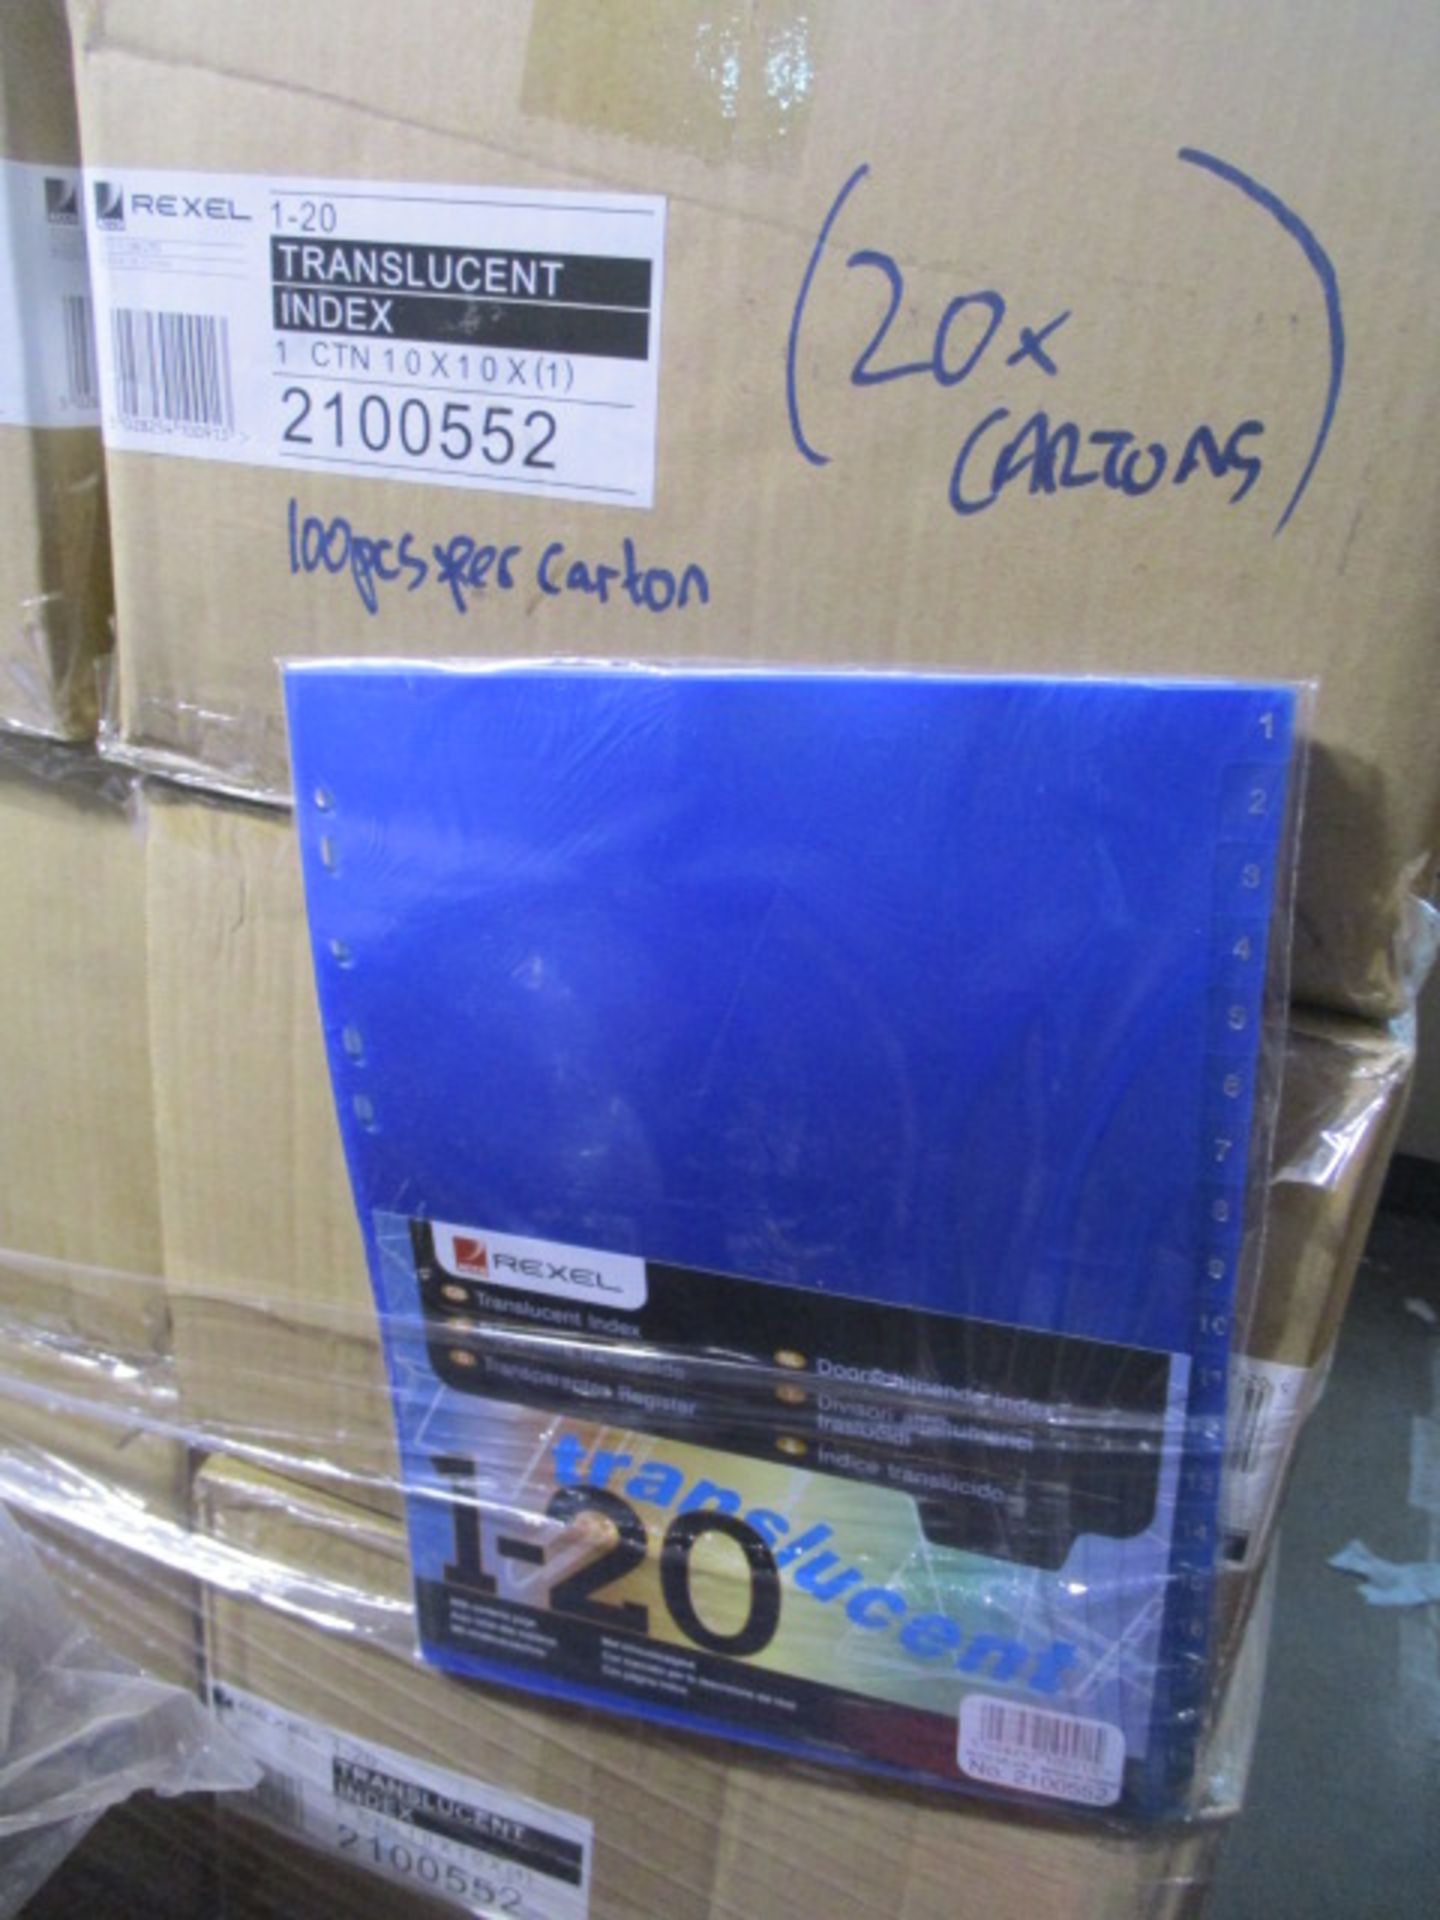 10 cartons brand new sealed tabbed divider packs - Image 2 of 2